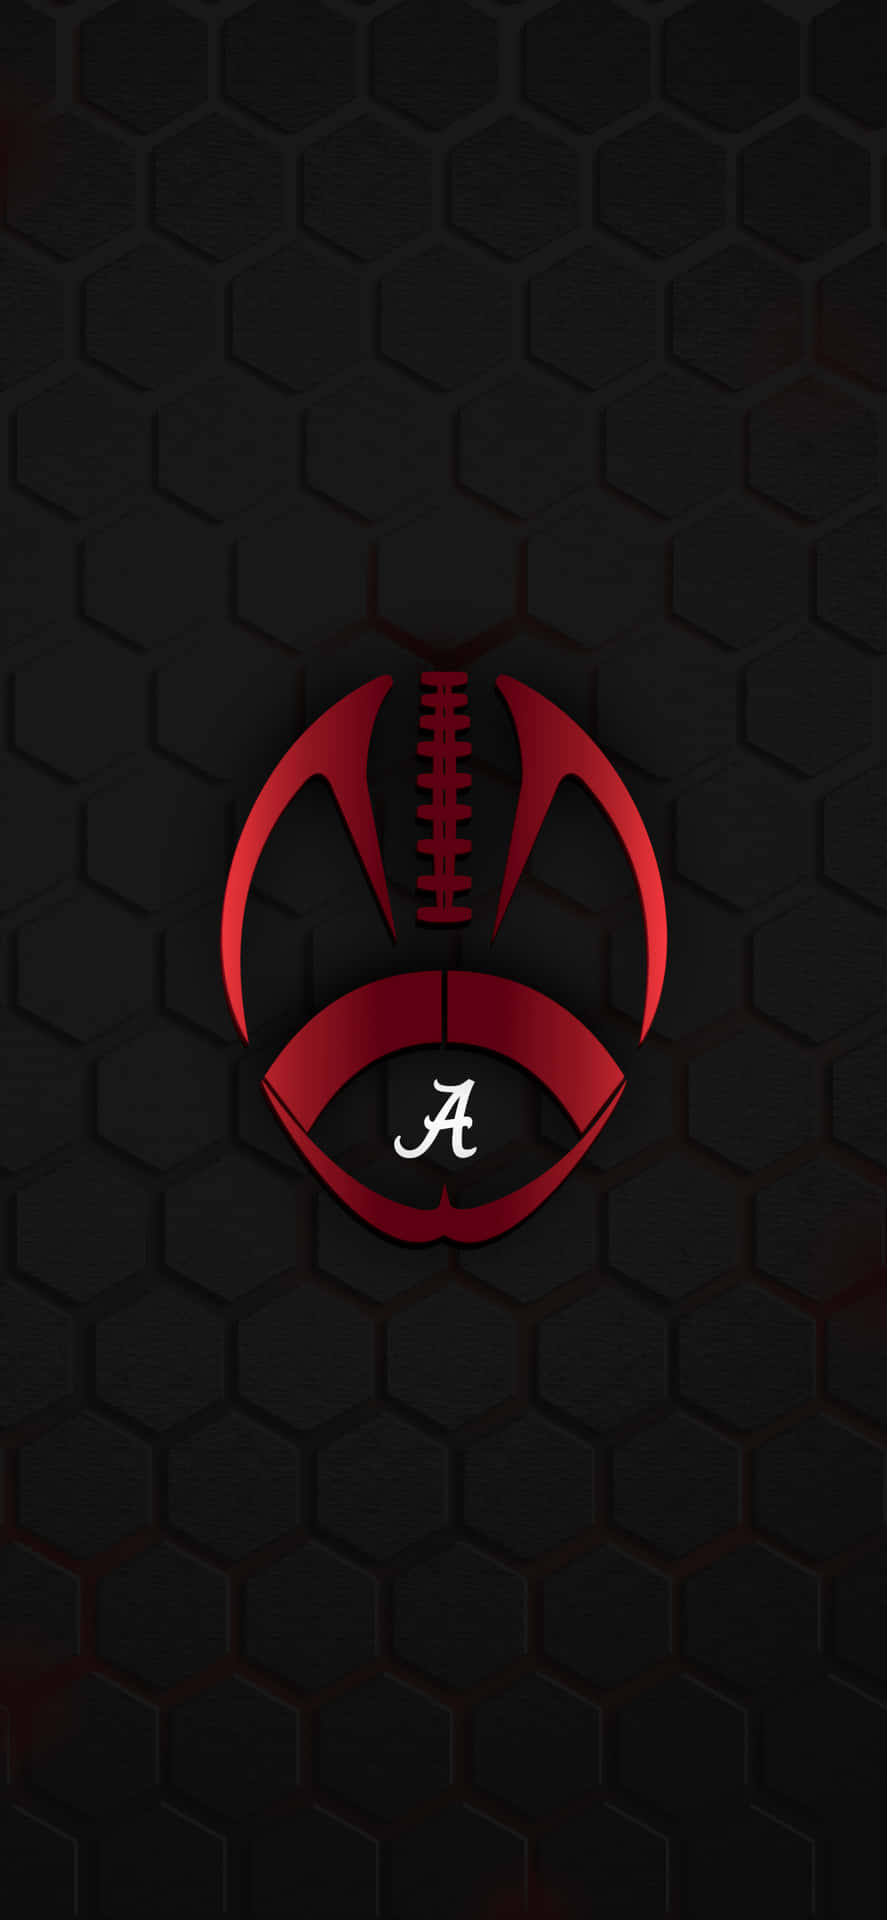 Startejeden Samstag Mit Dem Alabama Football-logo. Wallpaper